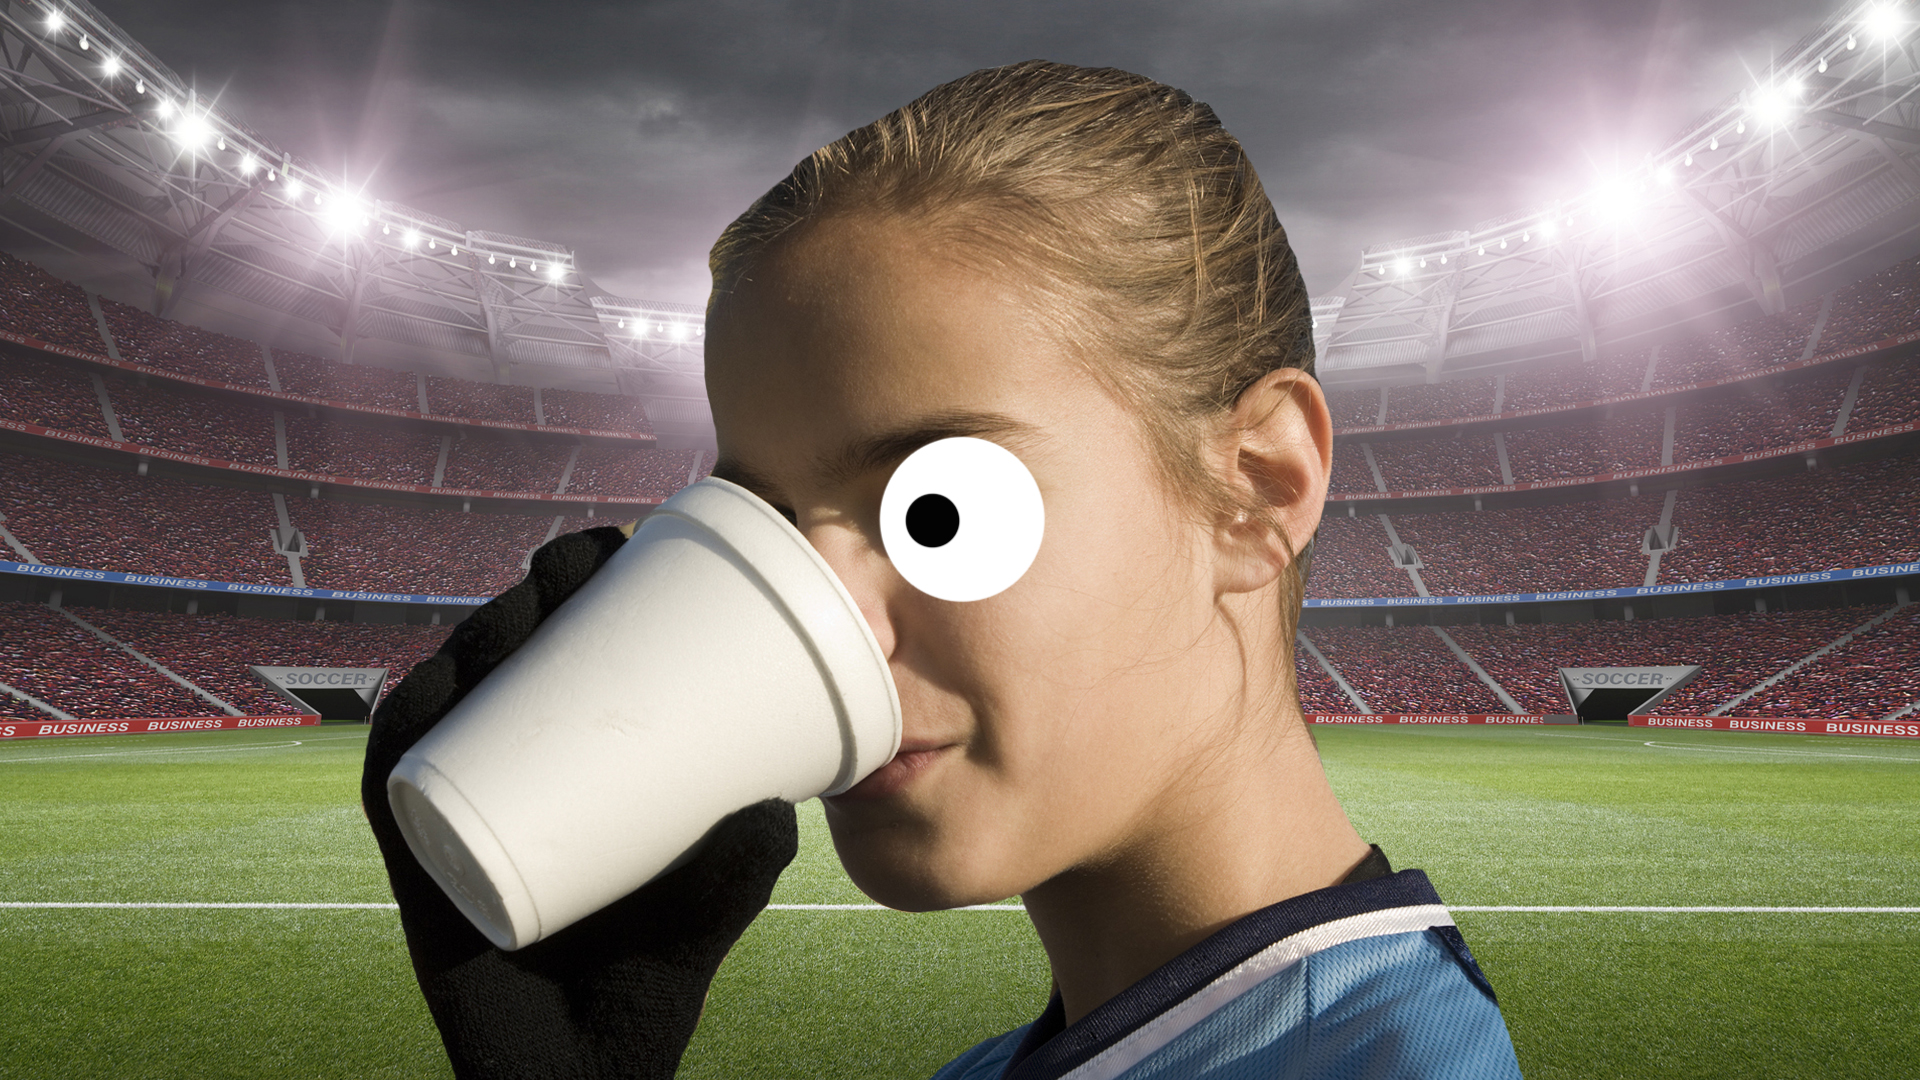 A footballer drinking a cup of tea